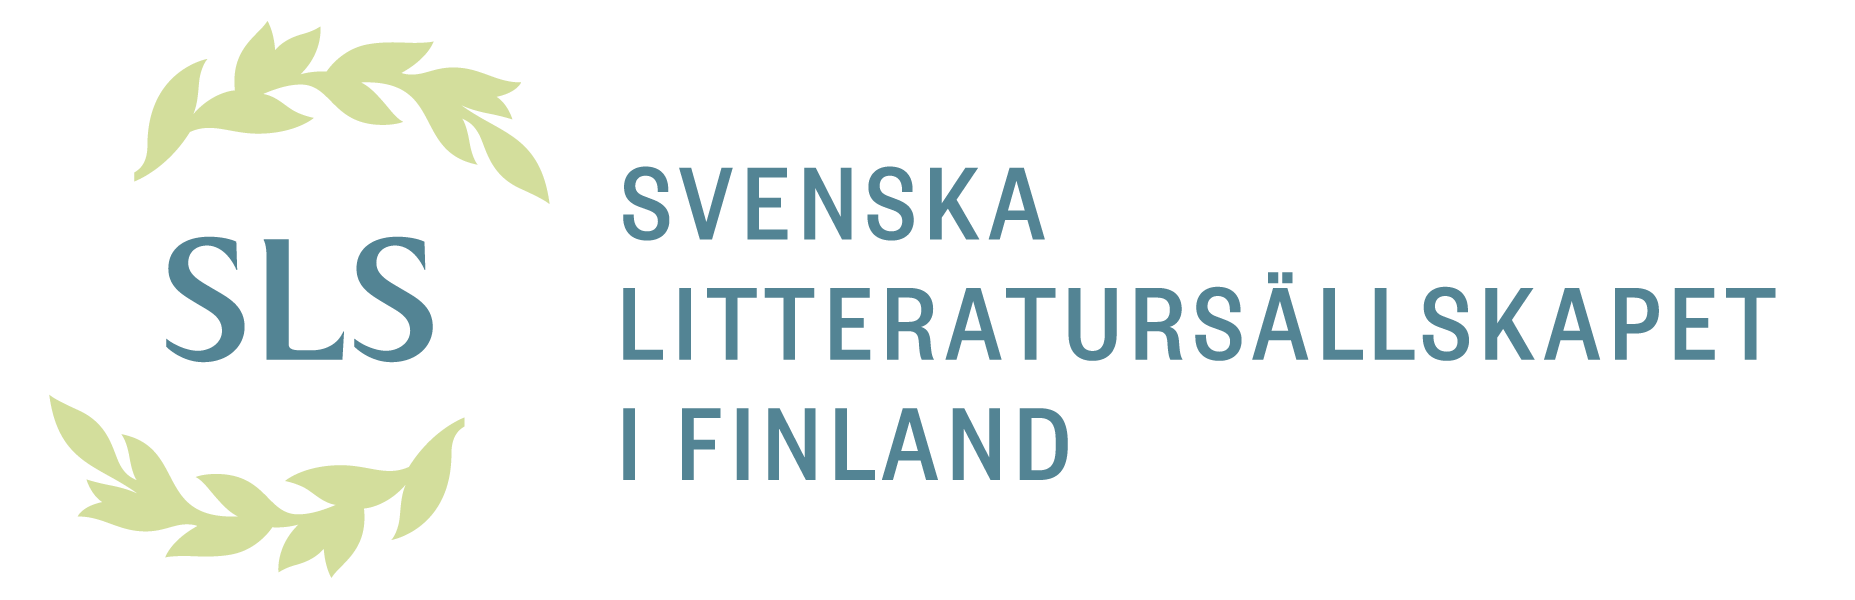 Svenska Litteratursallskapet i Finland